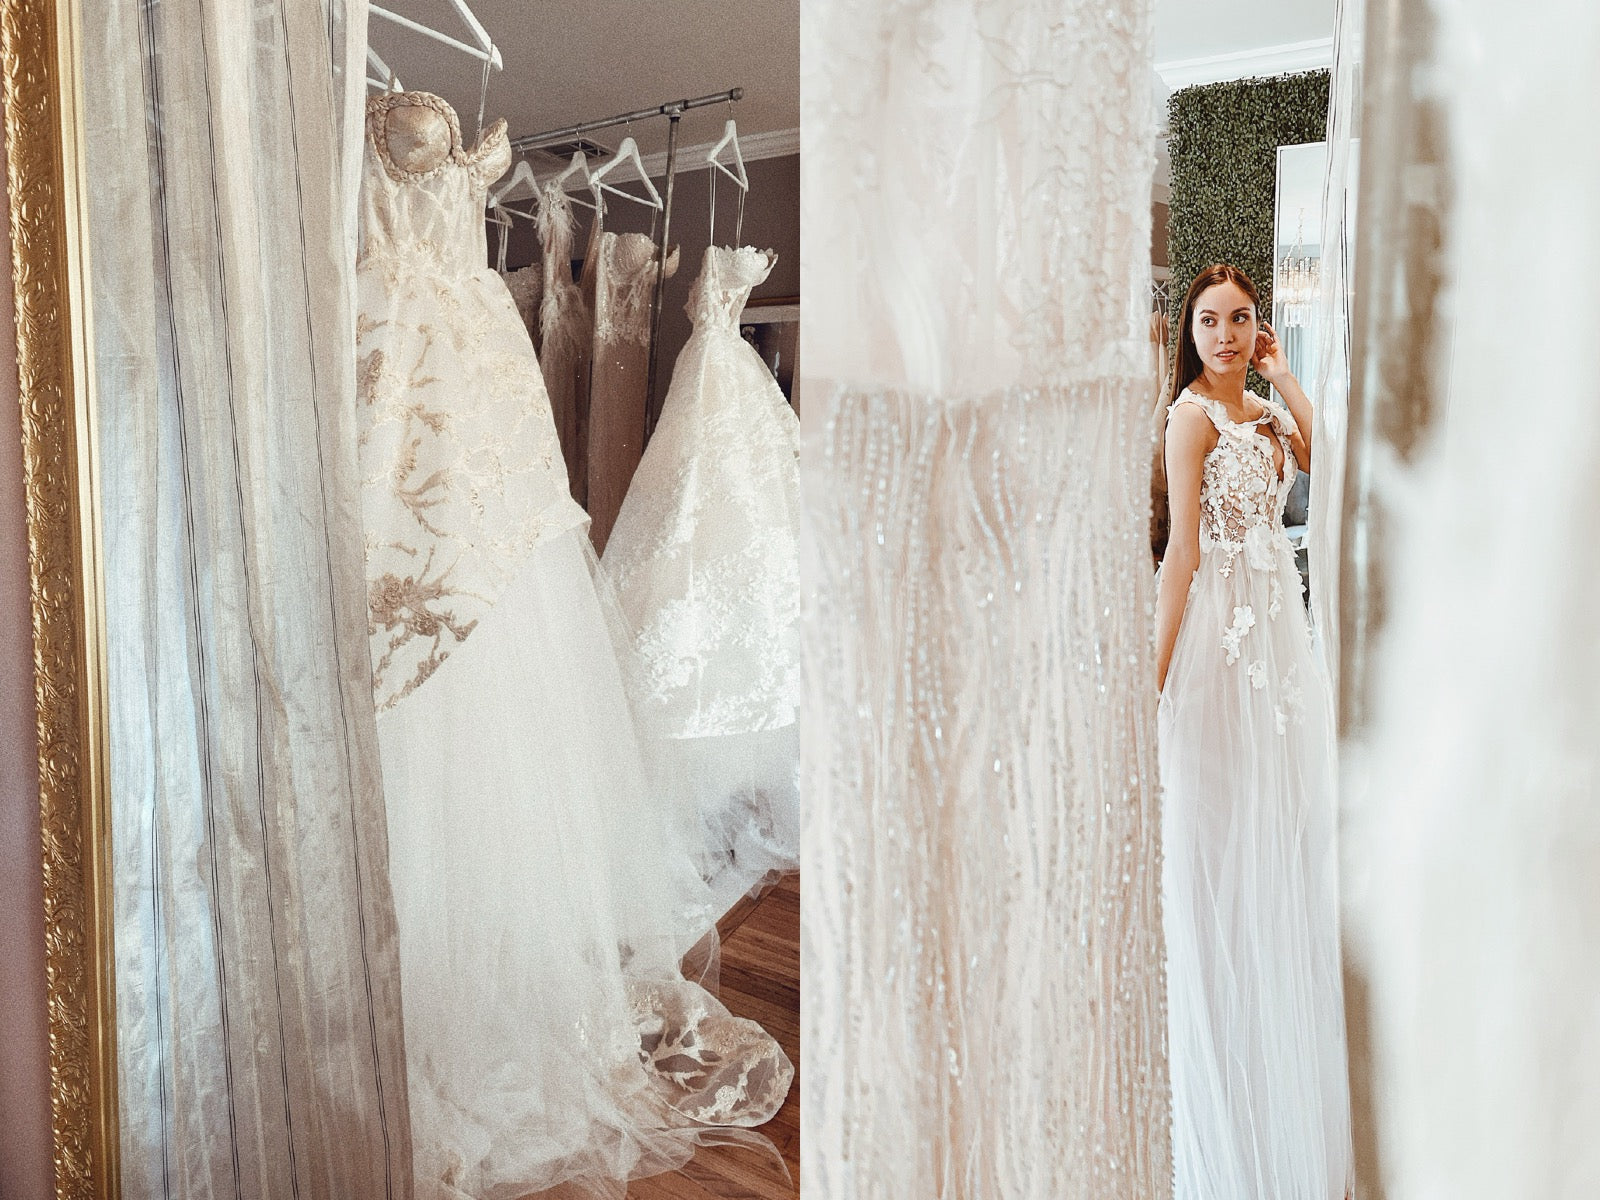 A bride tries on wedding gowns at the Lauren Elaine Los Angeles Bridal Salon